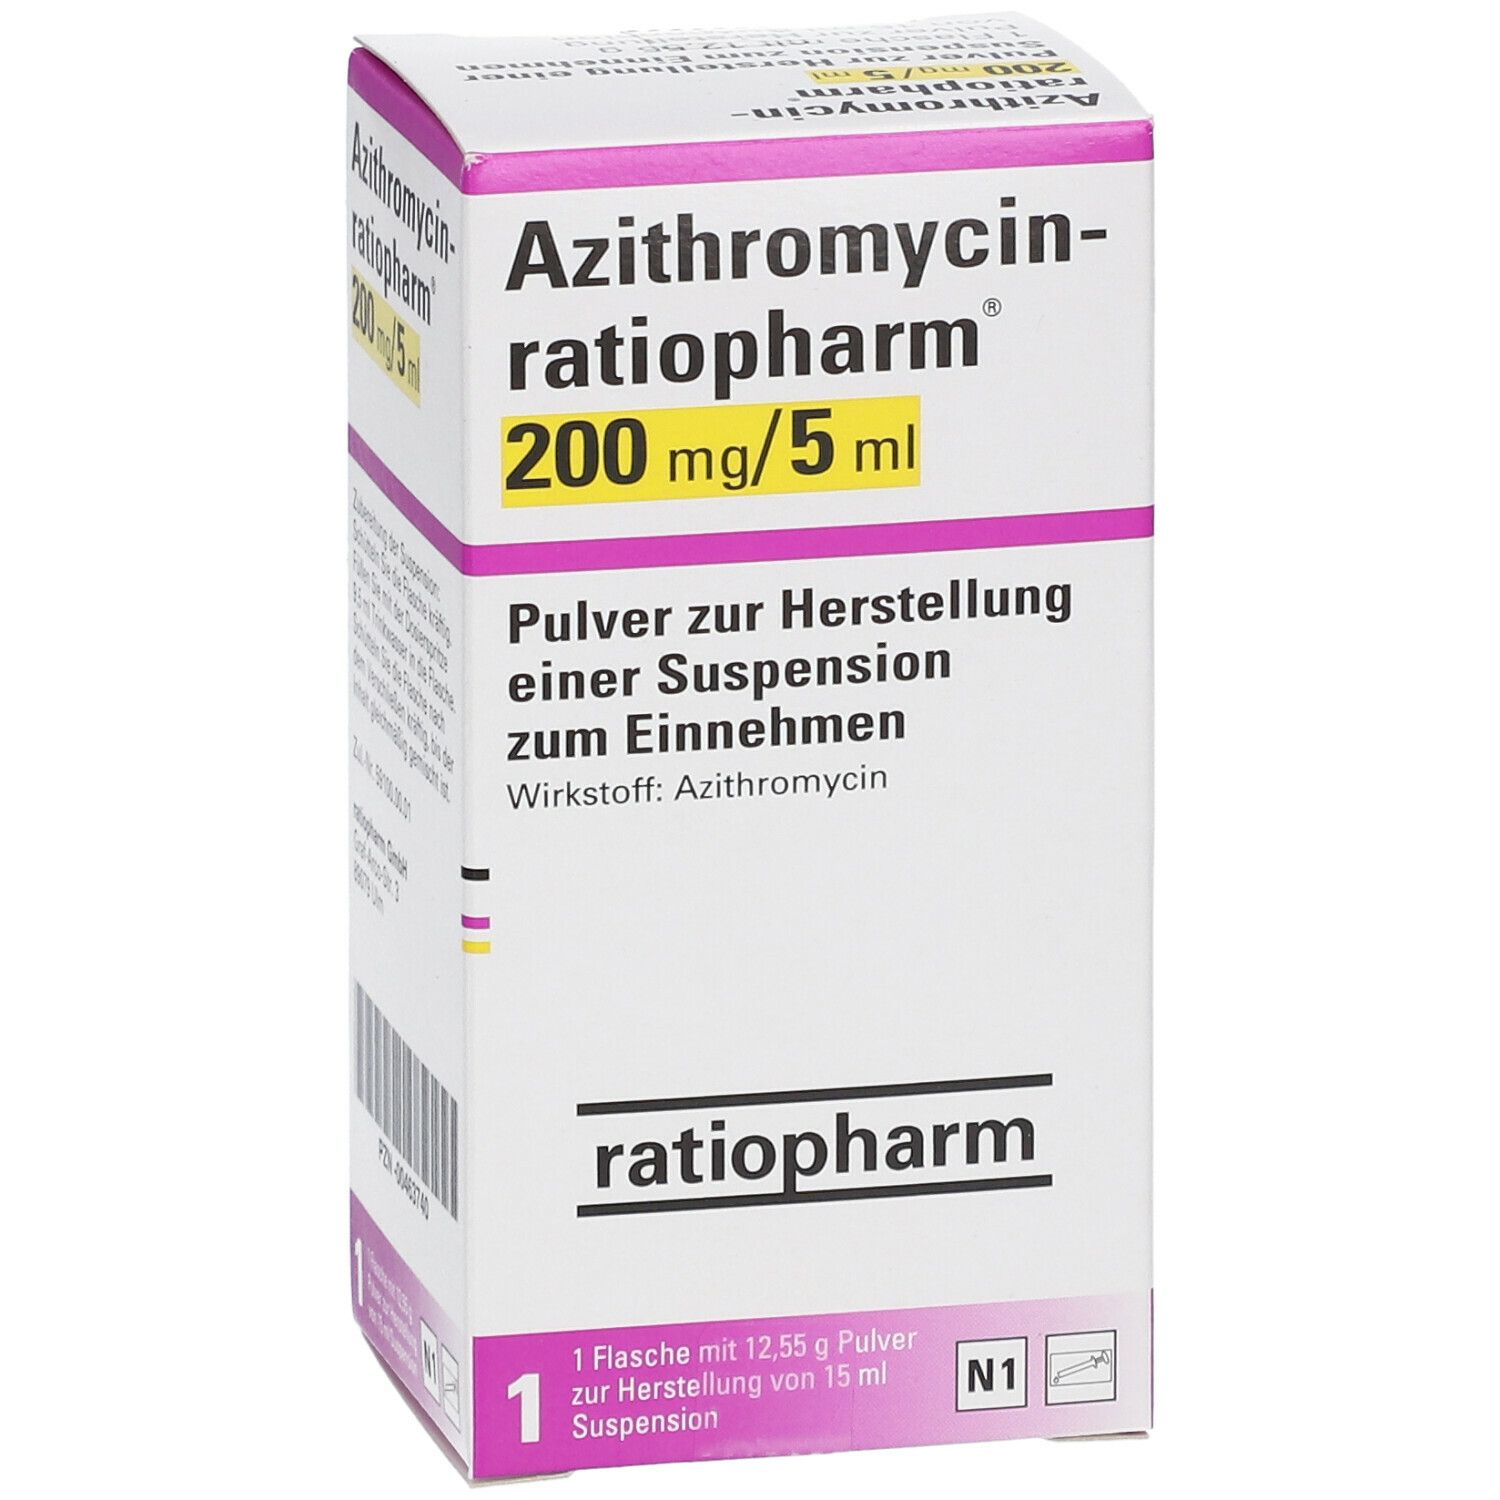 Azithromycin-ratiopharm® 200 mg/5 ml